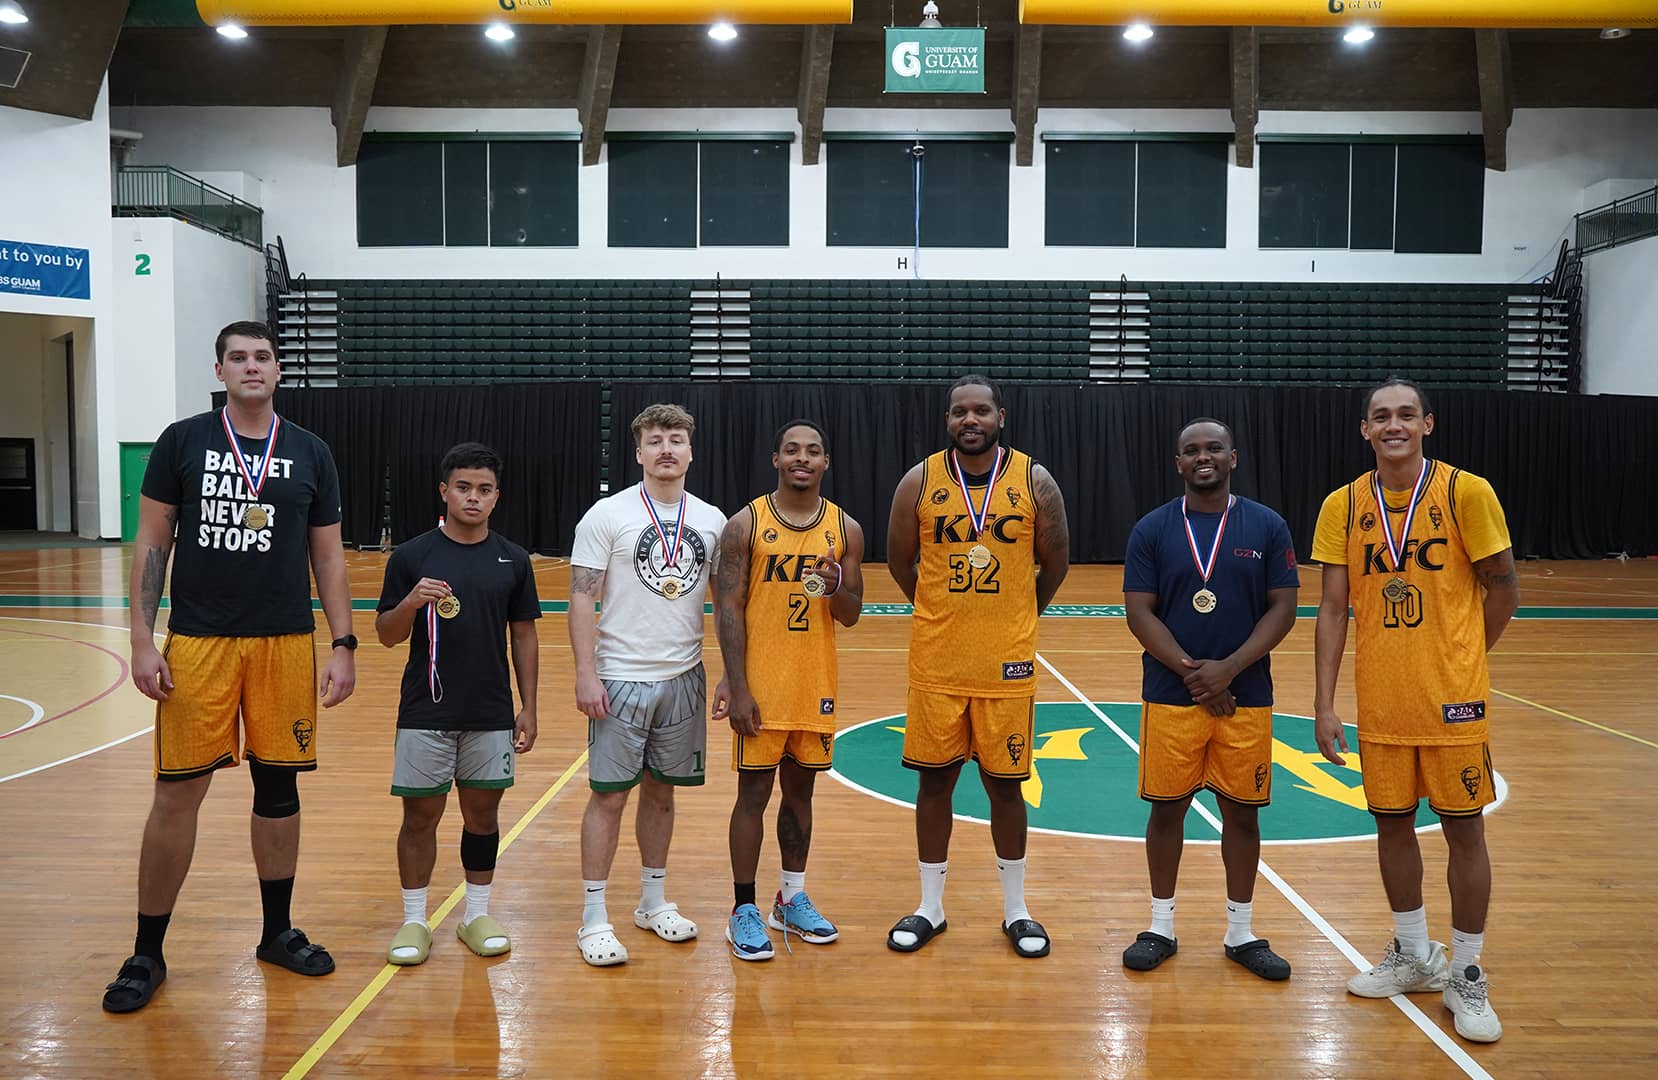 Triton Men’s Basketball League All-Tournament Team members